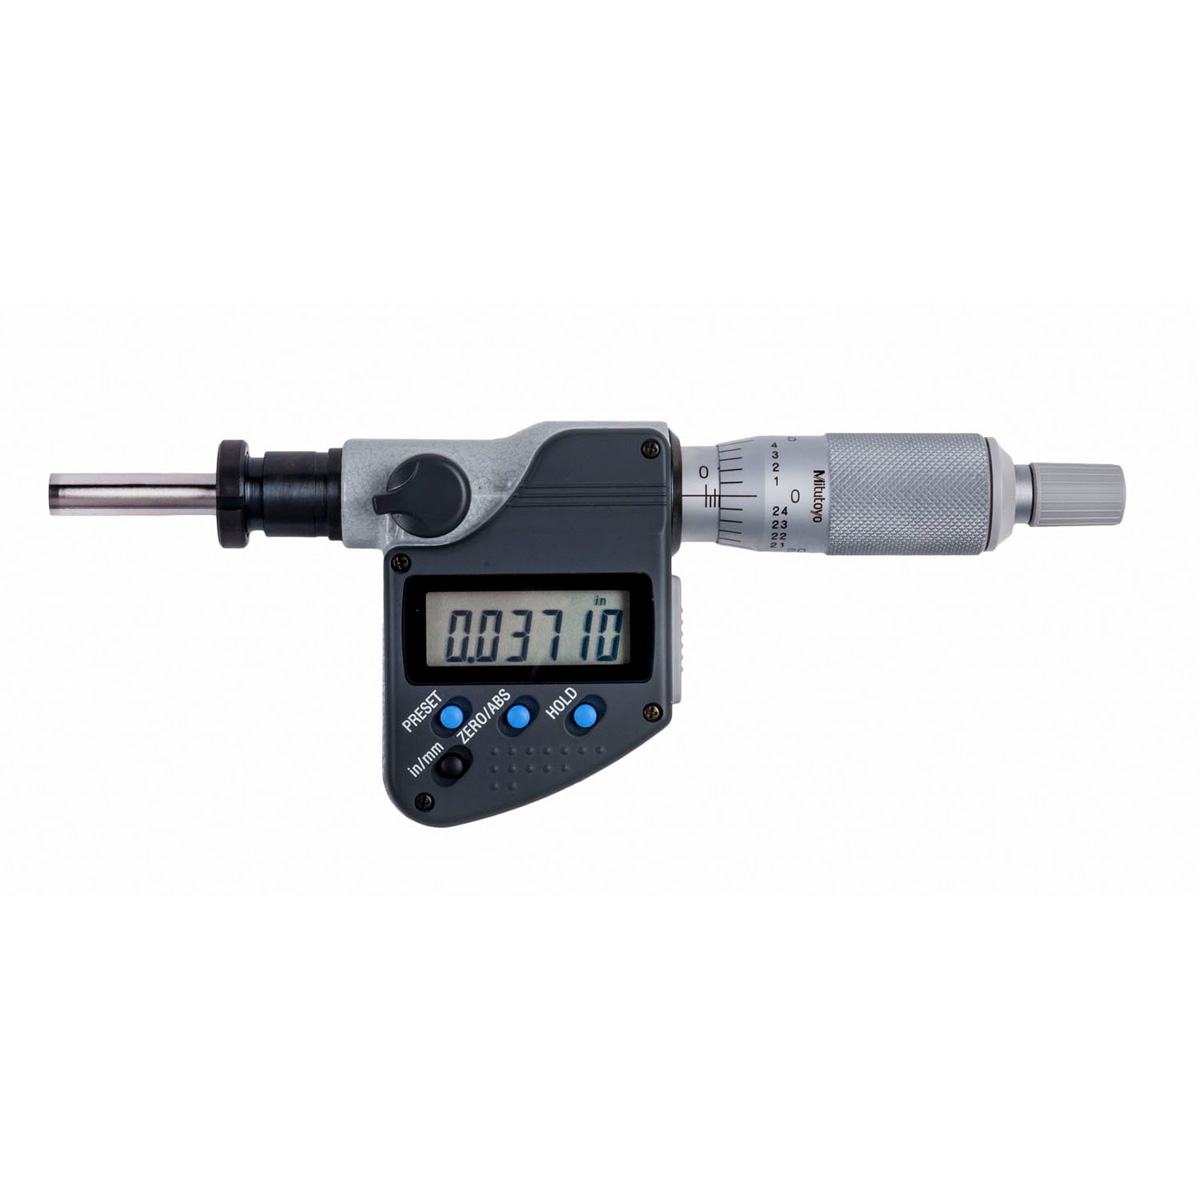 350-382-30 0-1 in. Digital Micrometer Head with IP65 C-Nut SPC Output - 0-25.4 mm -  Mitutoyo